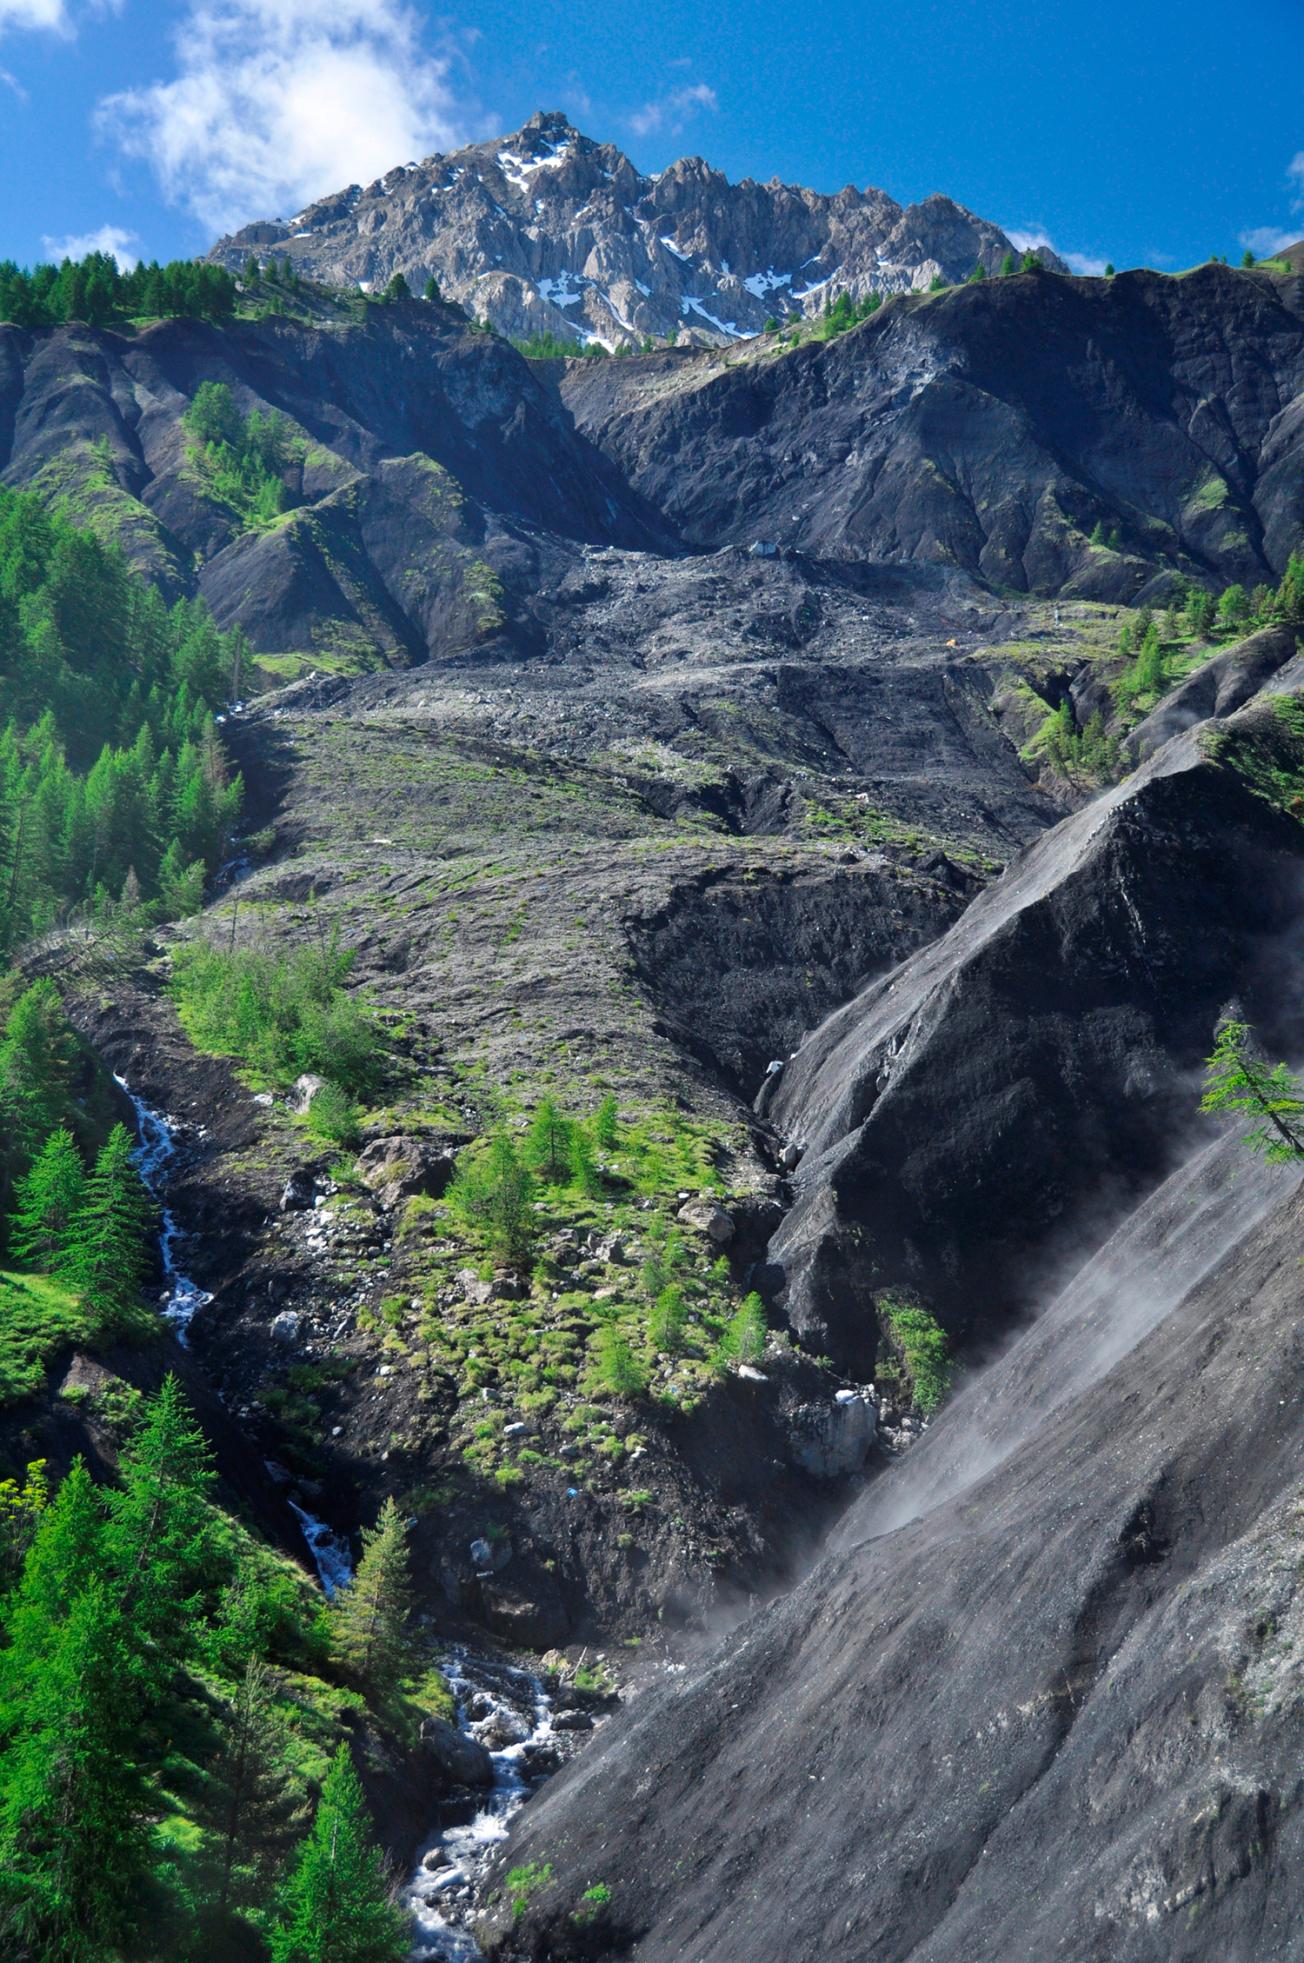 Photo taken from the bottom of the Super-Sauze landslide 